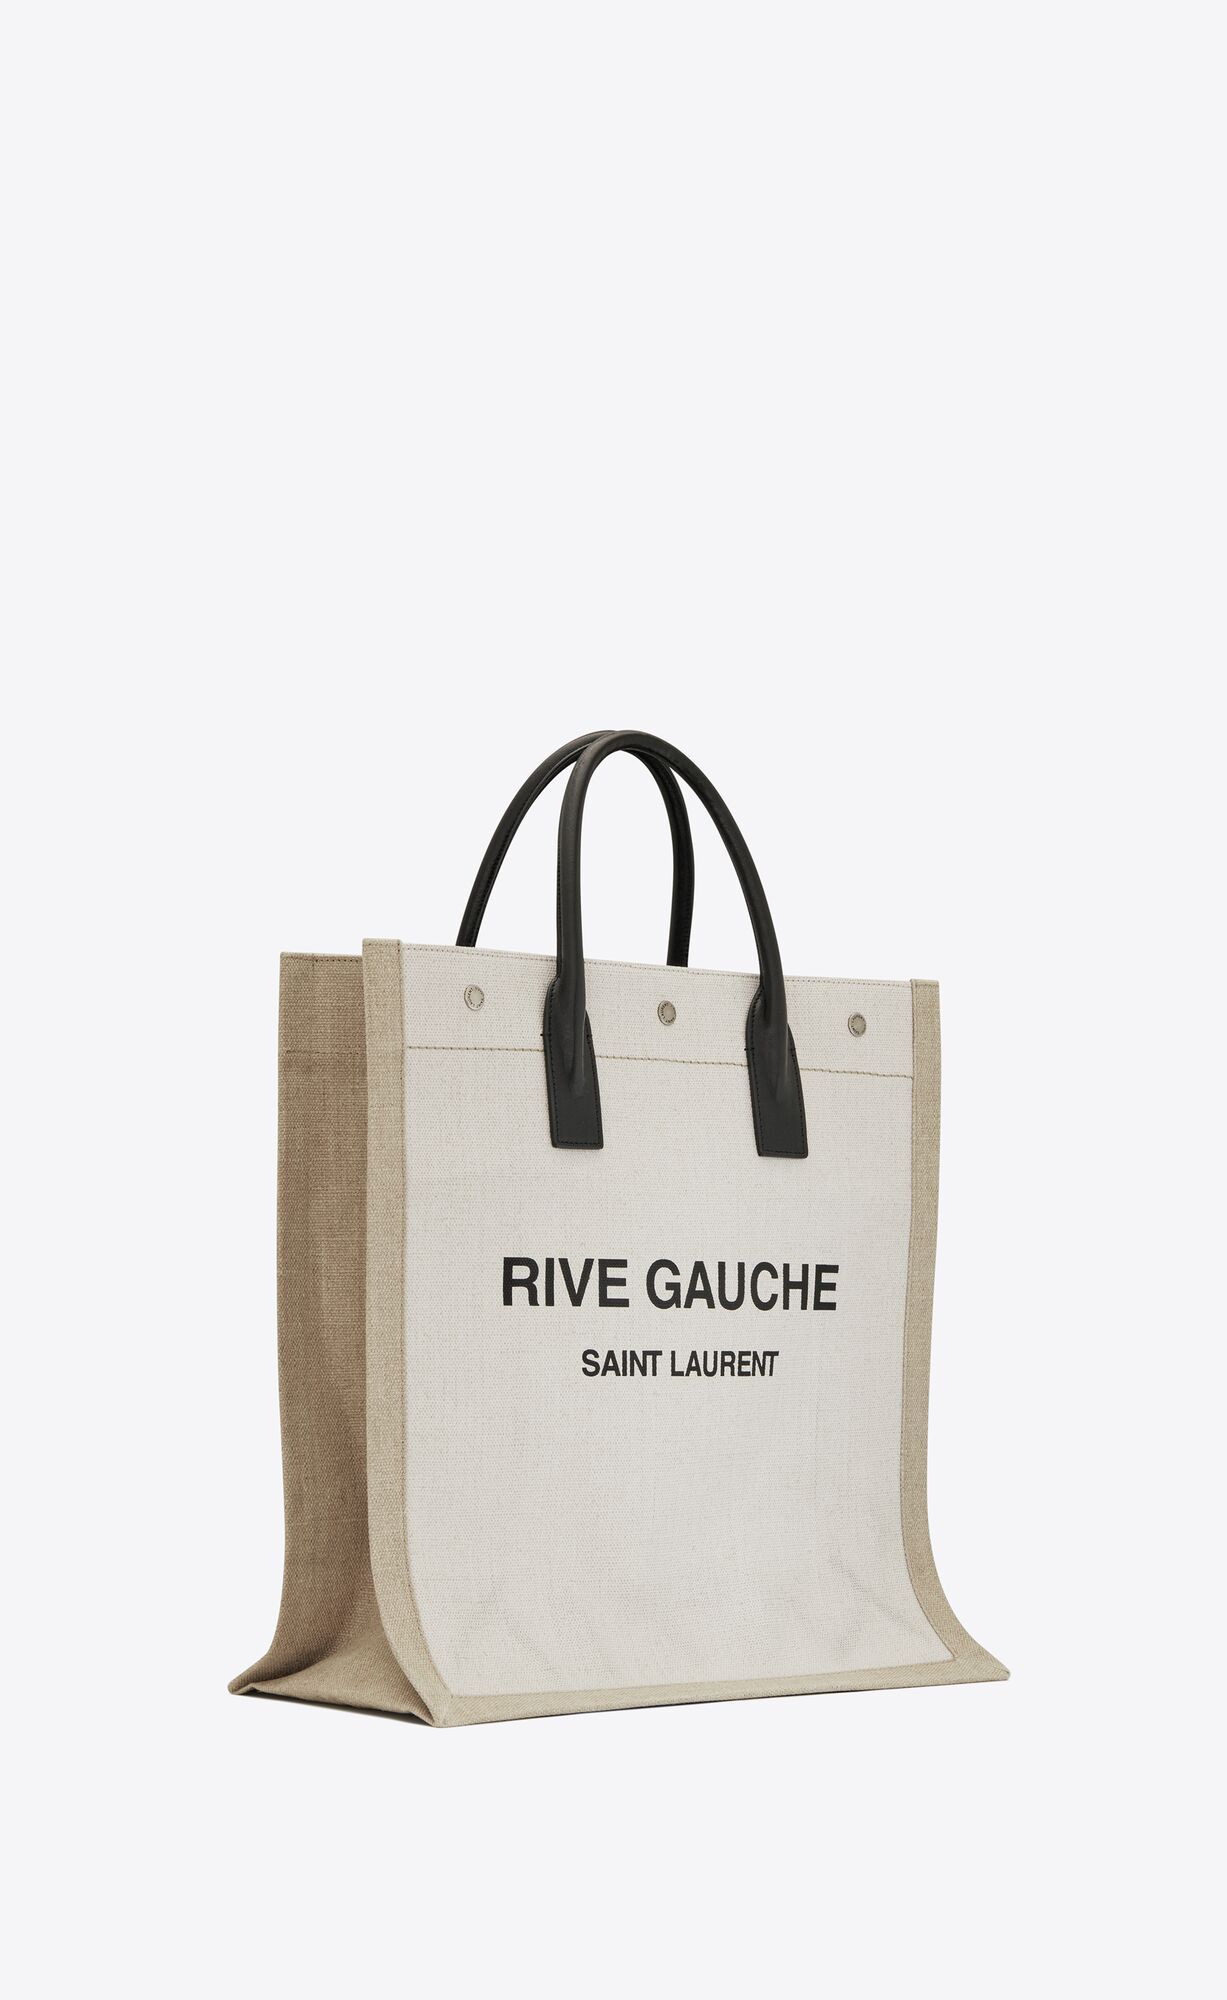 RIVE GAUCHE n/s shopping bag in linen and cotton | Saint Laurent | YSL.com | Saint Laurent Inc. (Global)